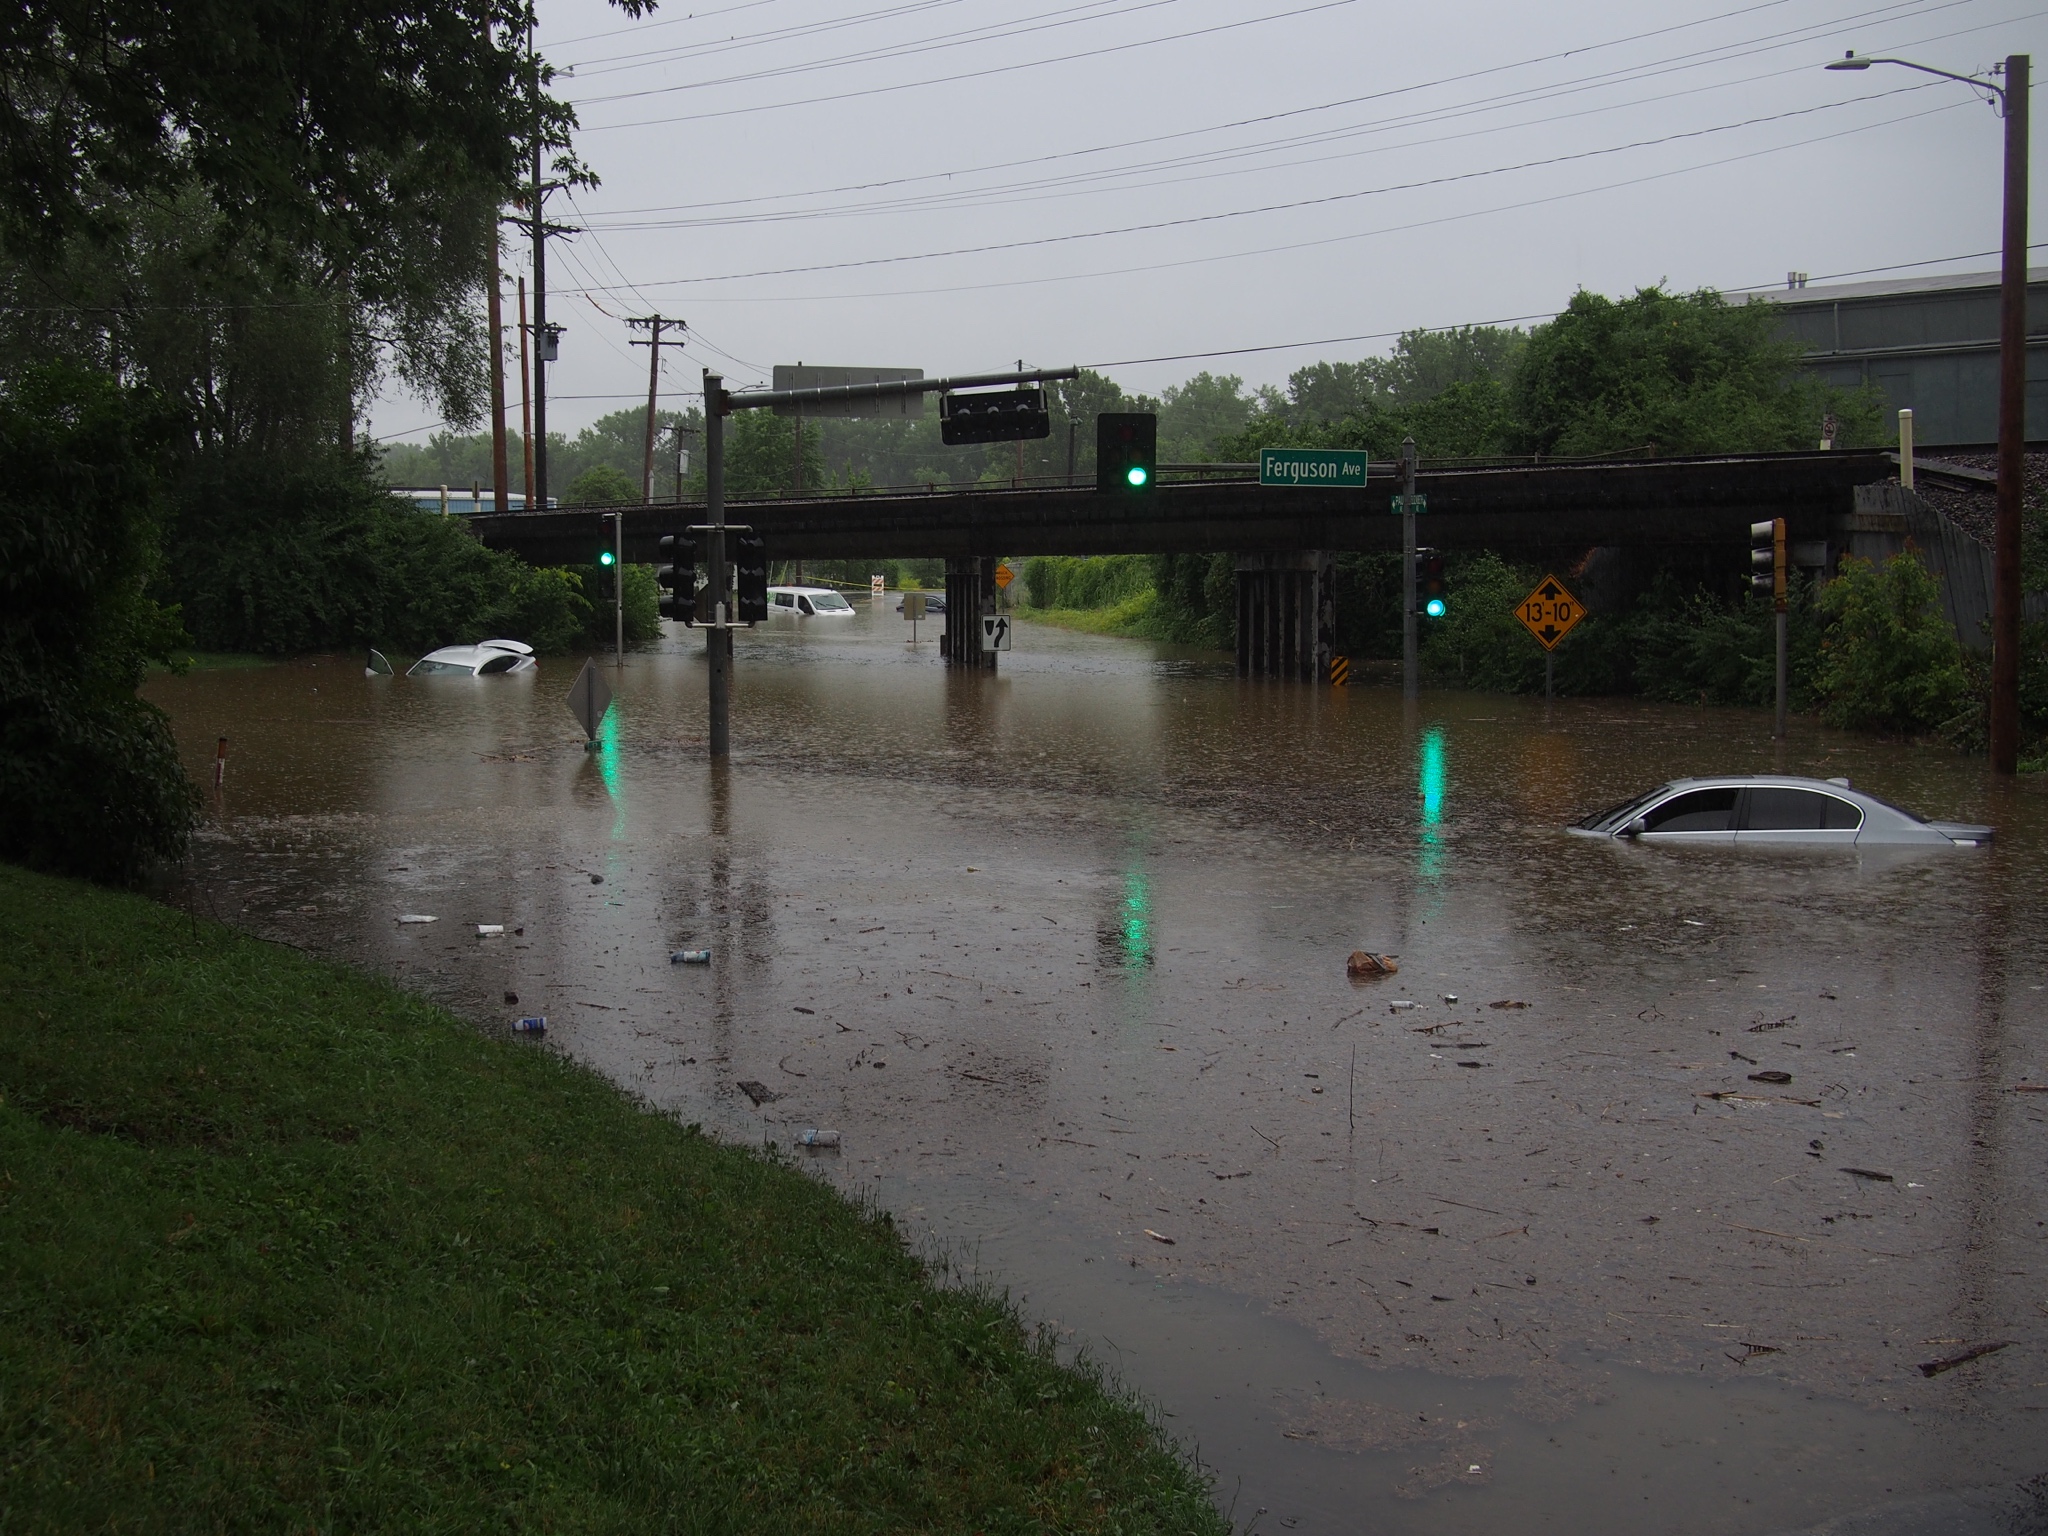 Flooding on South Elizabeth and Ferguson Avenue in Ferguson, MO.